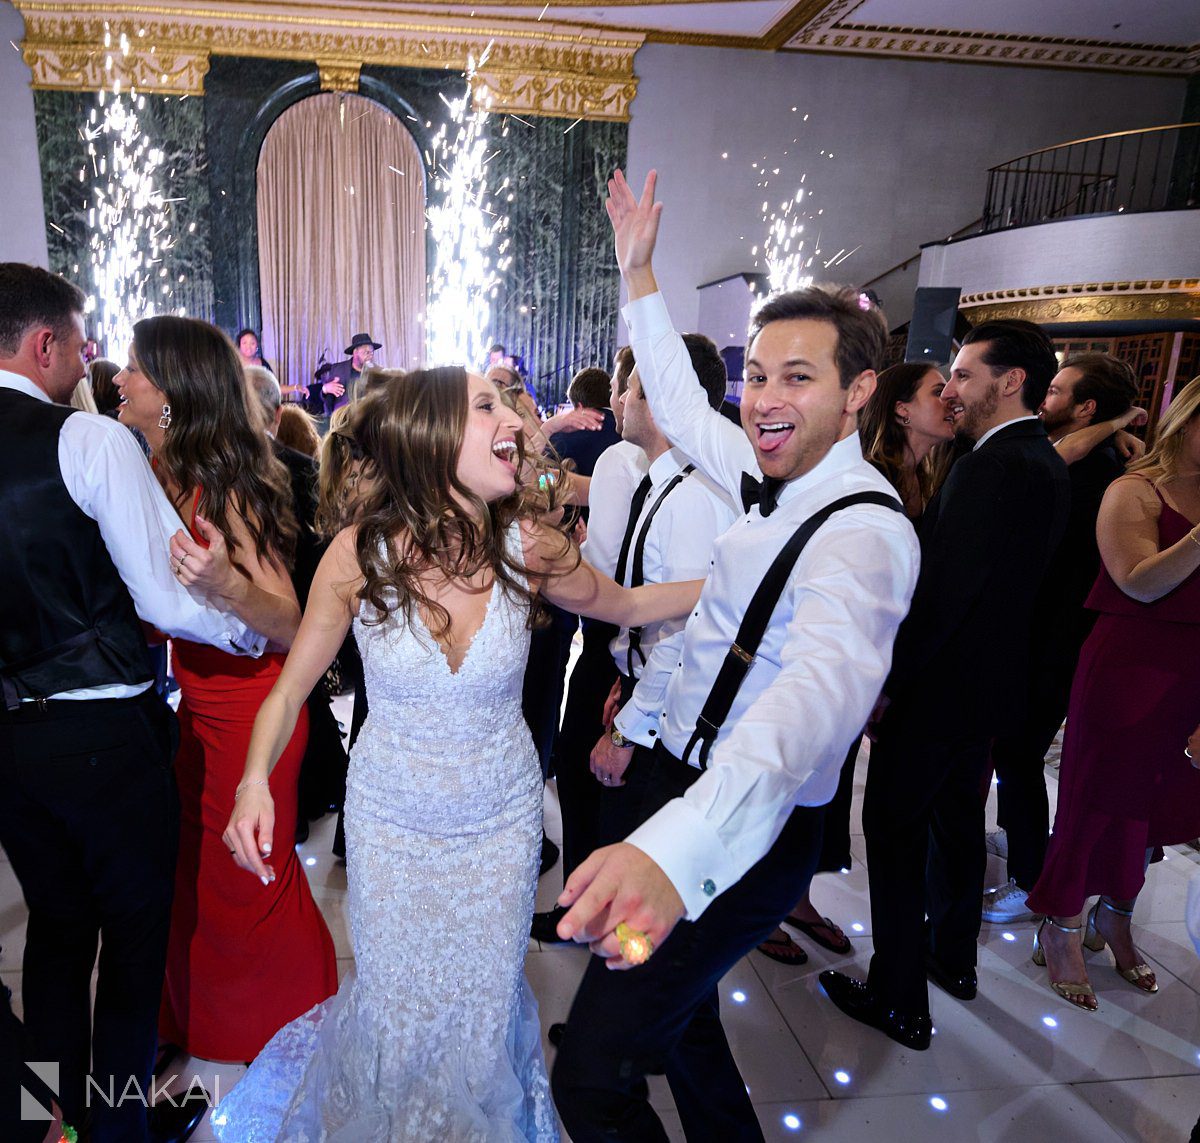 intercontinental chicago wedding photos reception ballroom sparklers